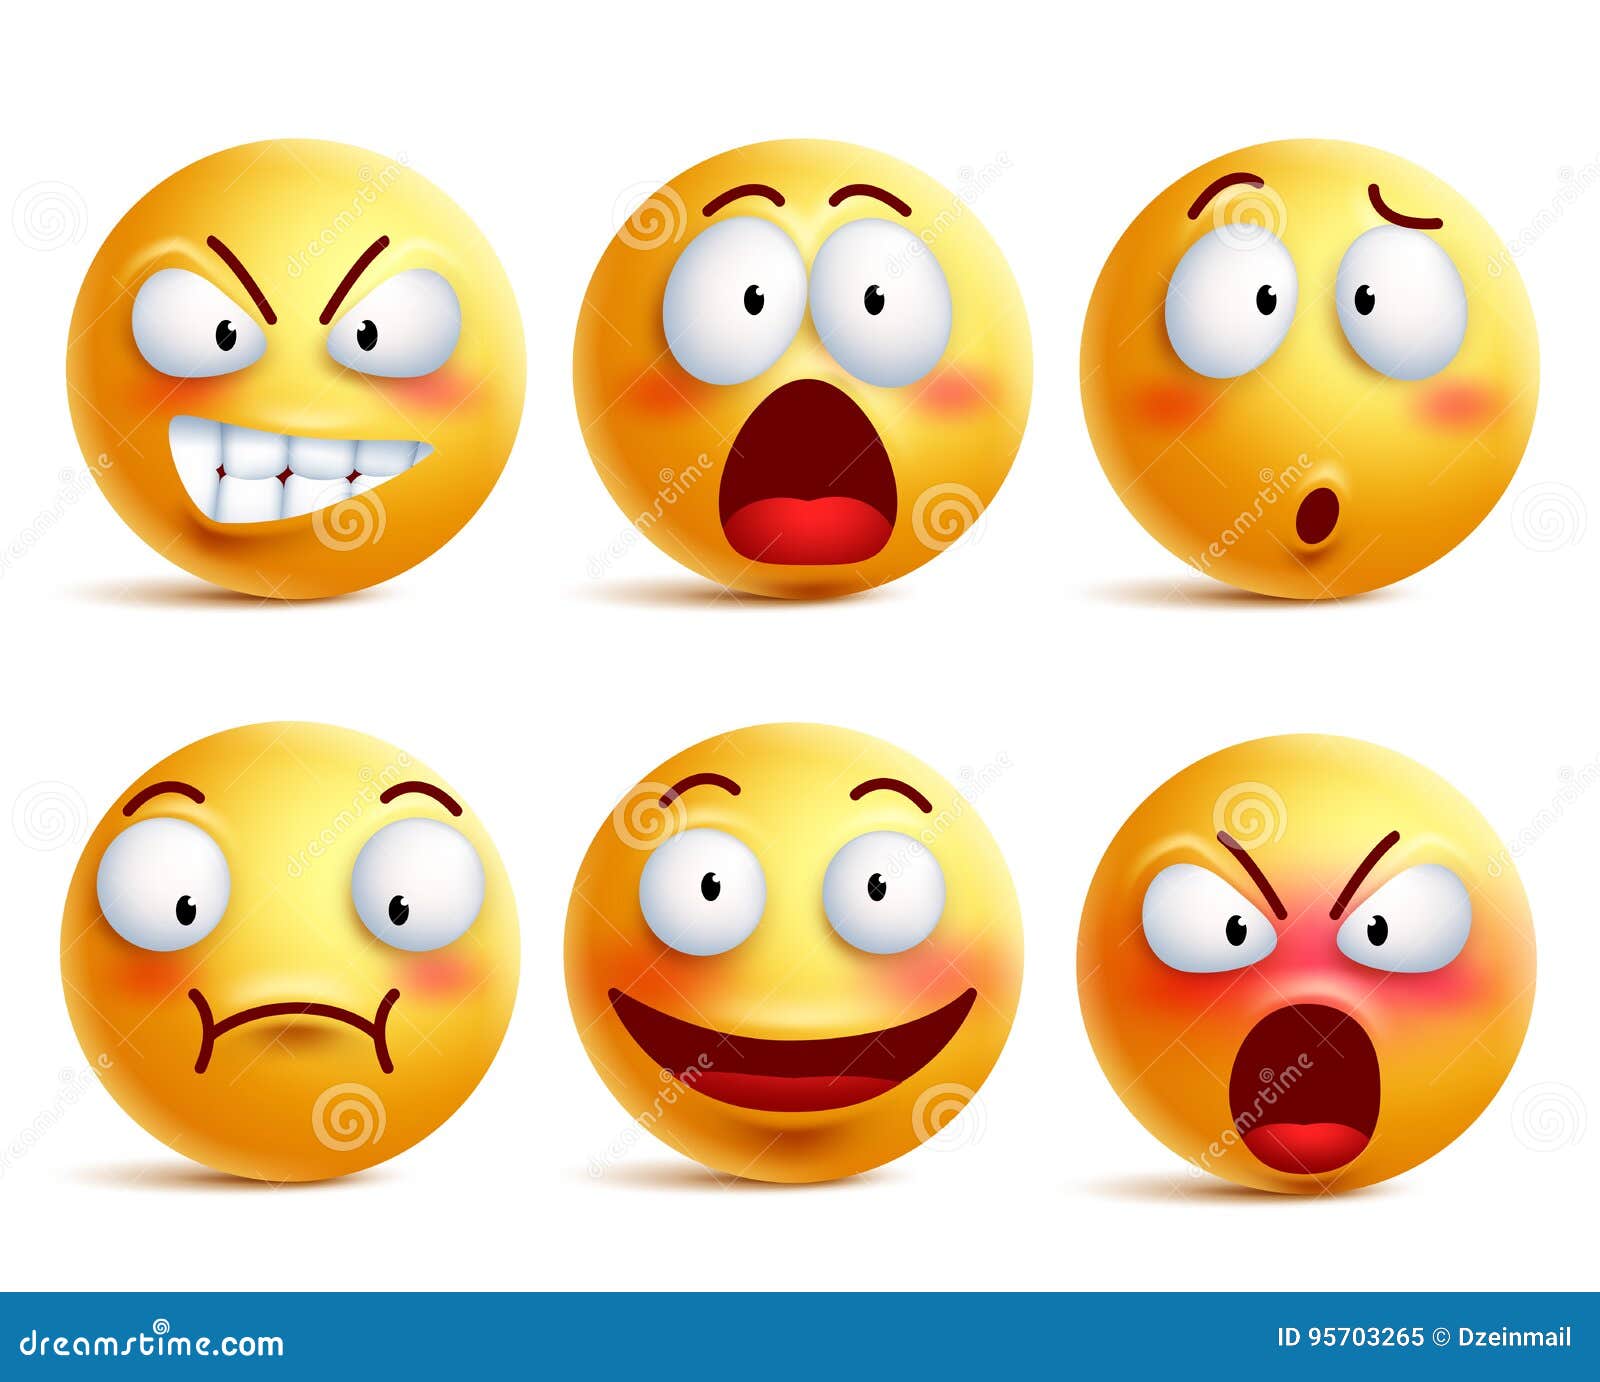 Smileys Vector Set. Smiley Face or Yellow Emoticons with Facial ...